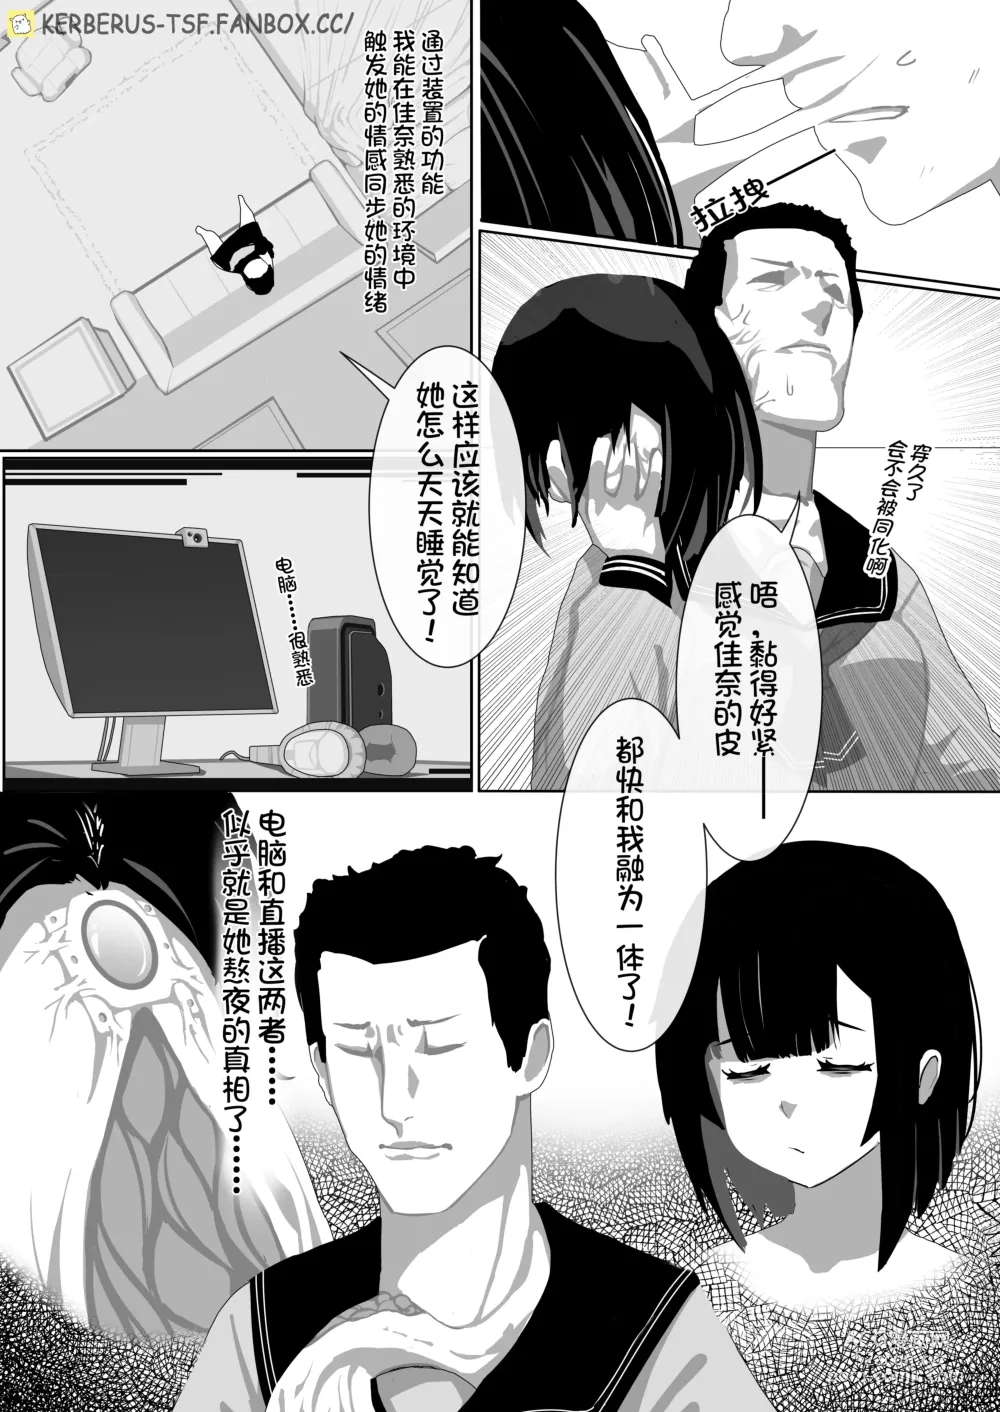 Page 3 of manga 皮物問題學生 #1 渡邊佳奈、2